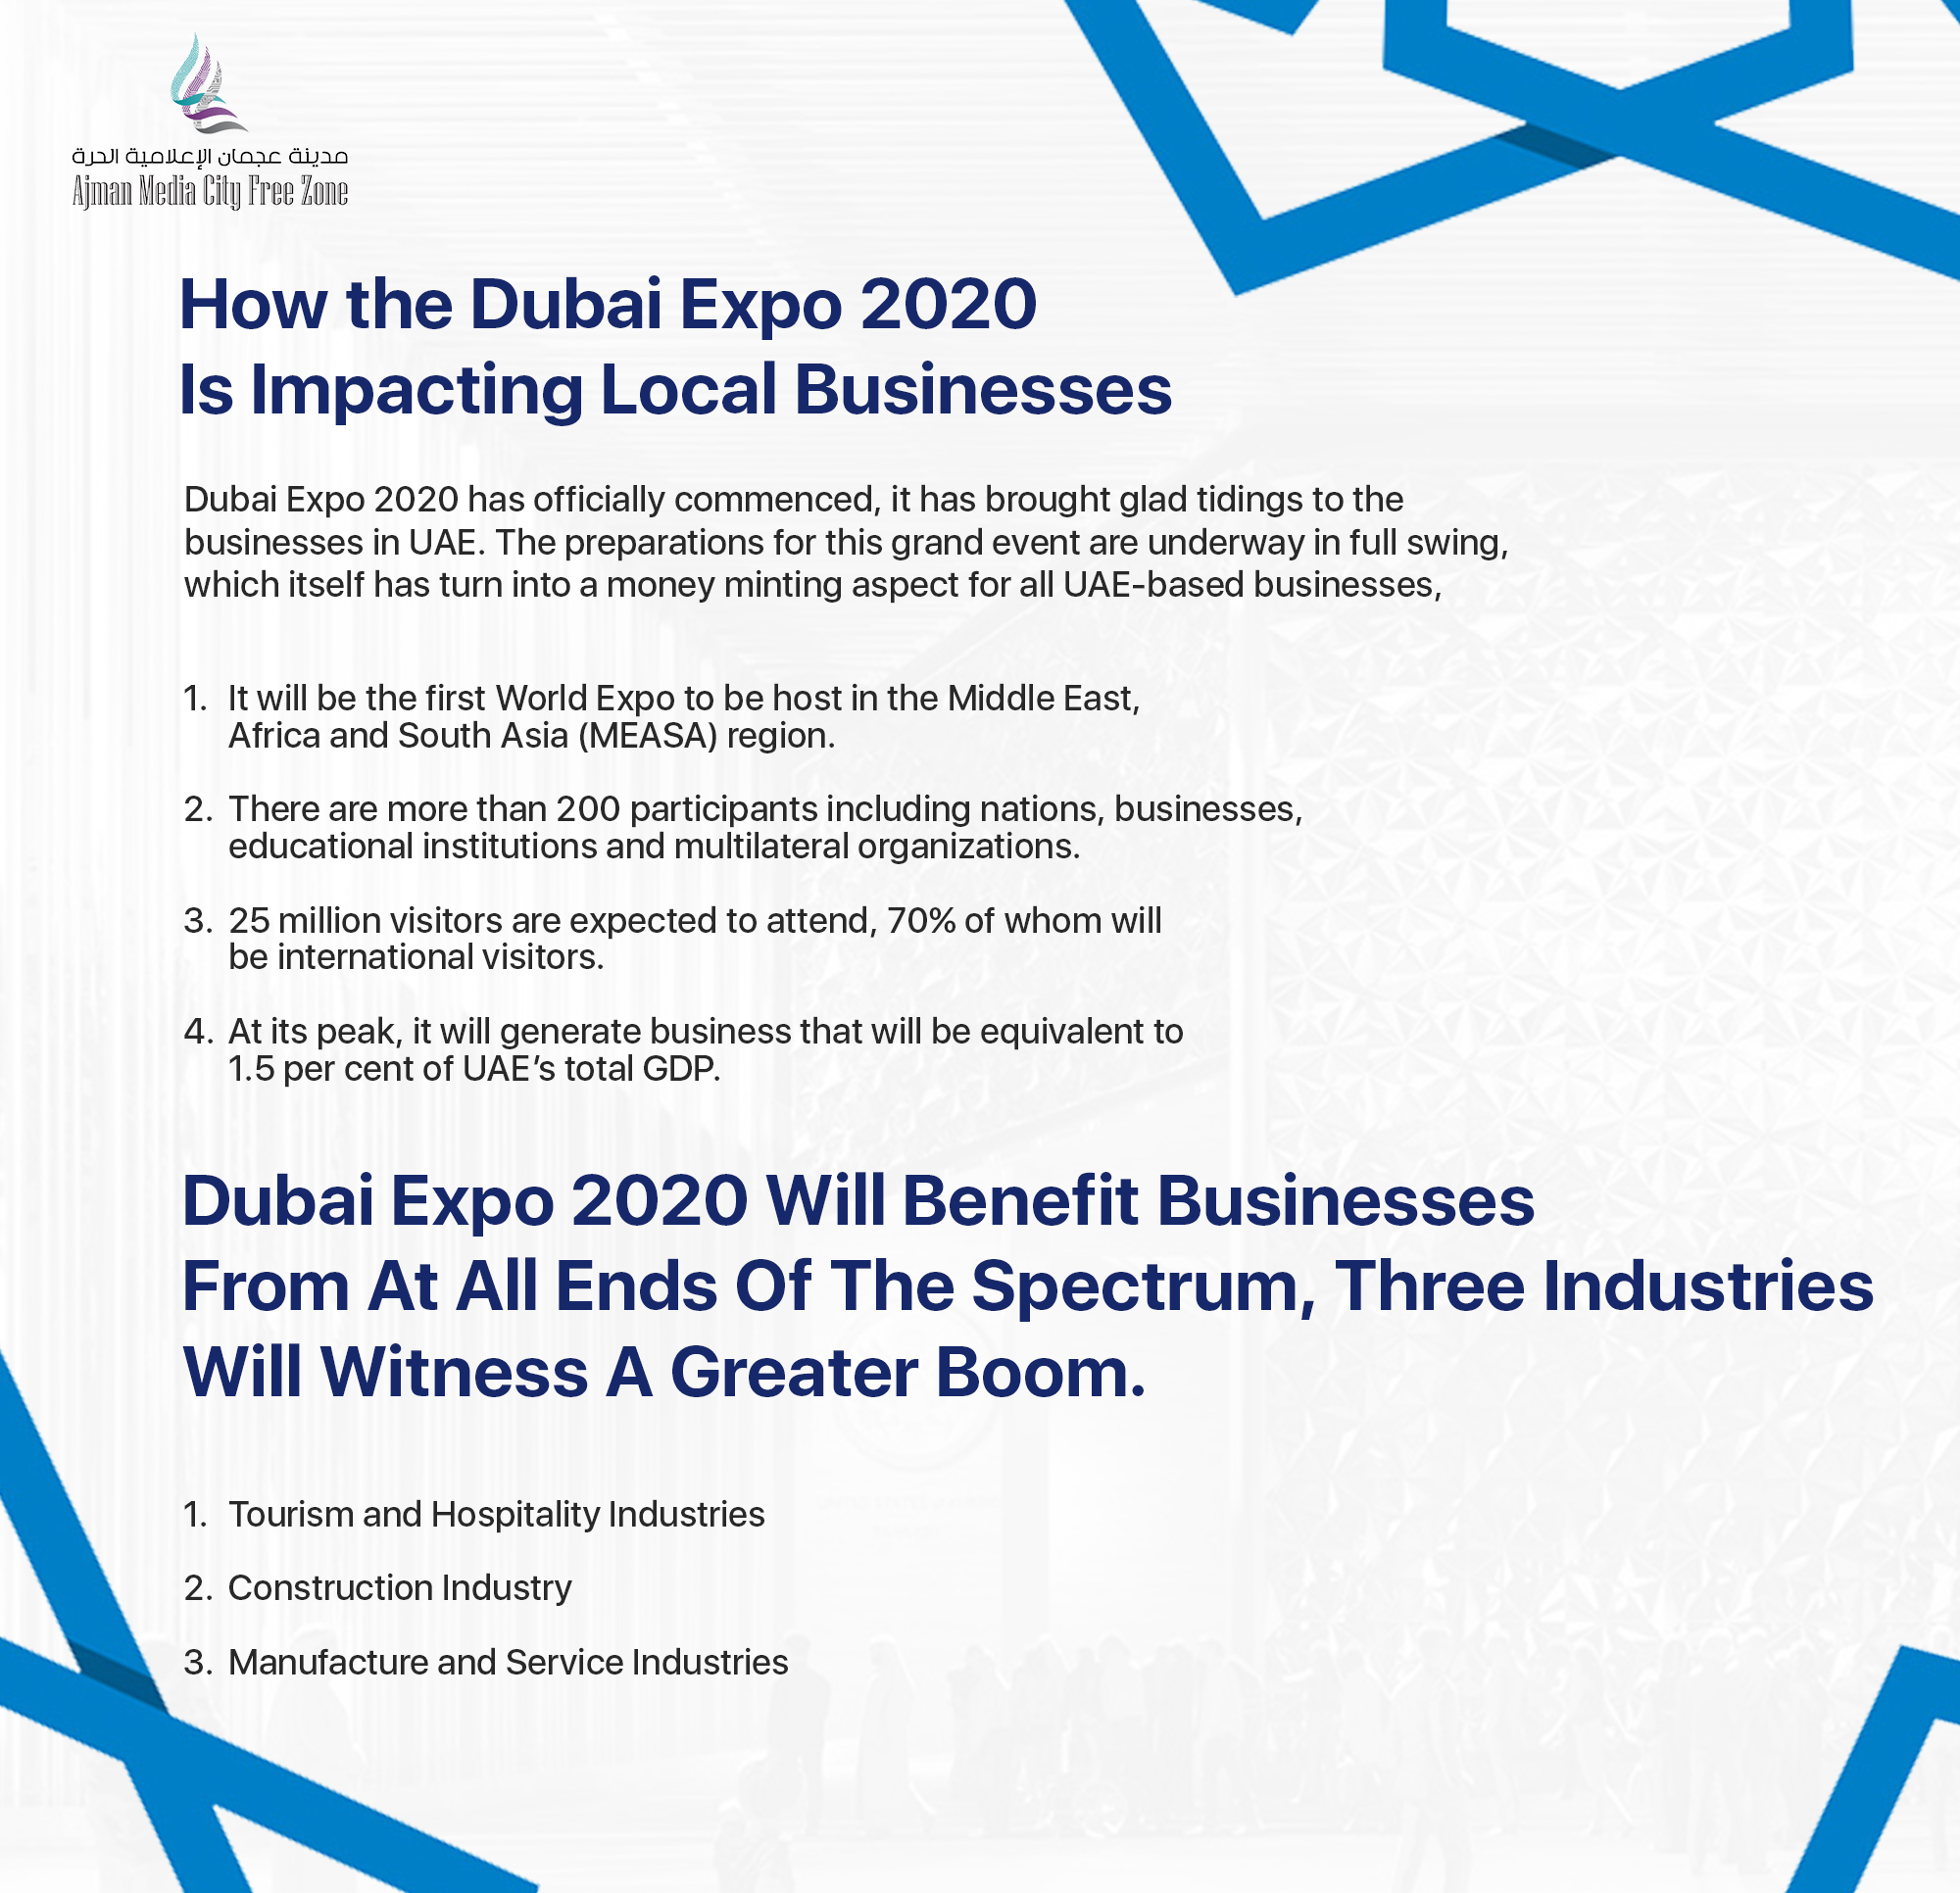 Will Dubai Expo 2020 Is Impacting Local Businesses?